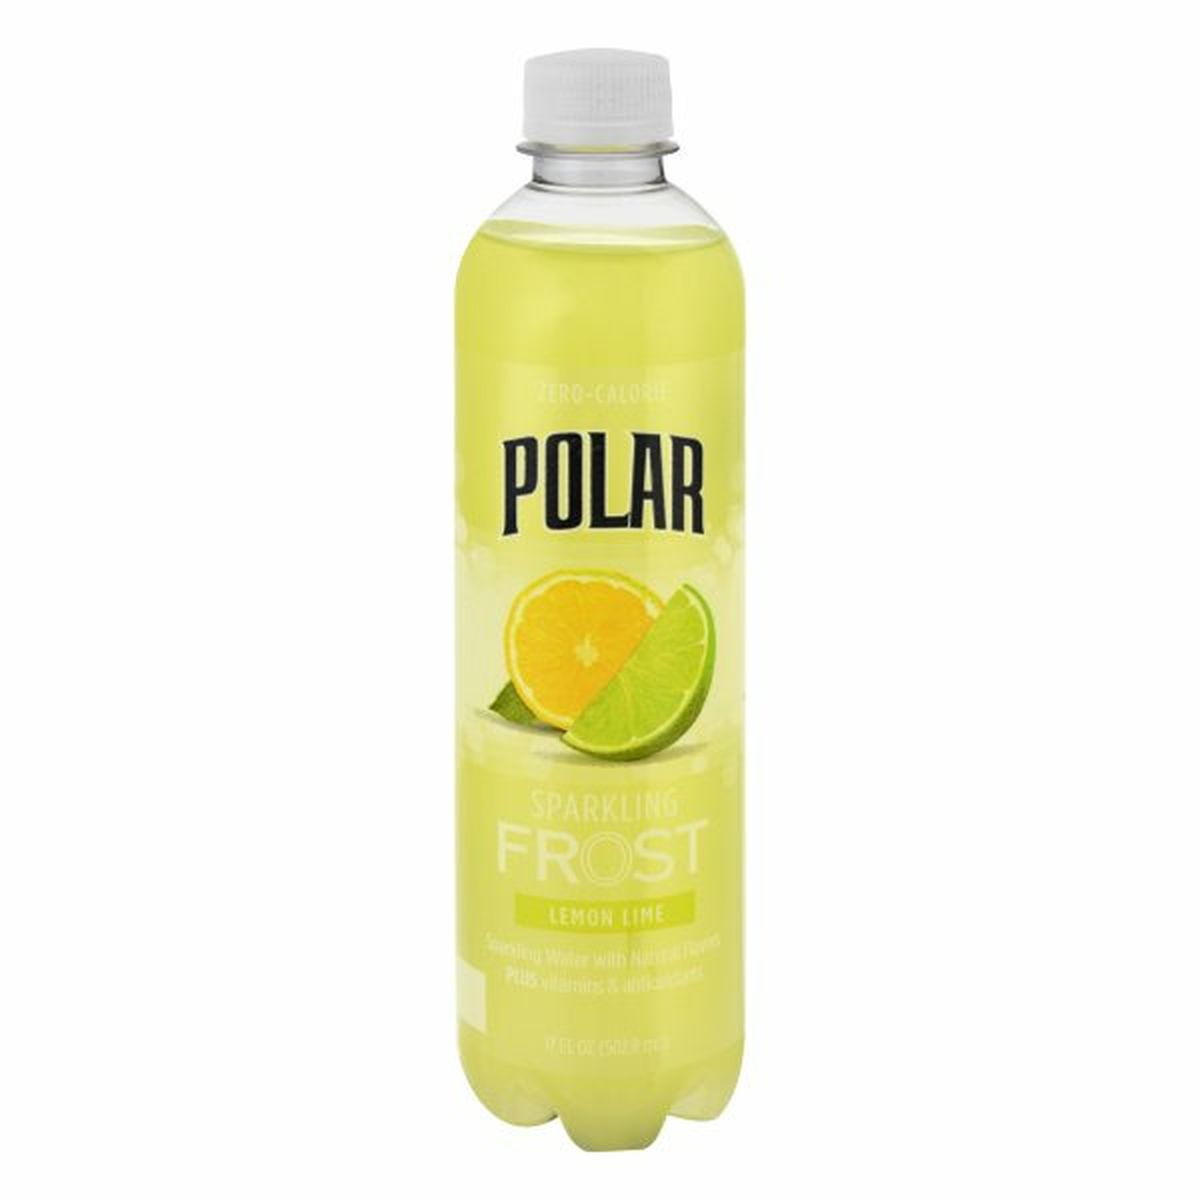 Calories in Polar Sparkling Water, Lemon Lime